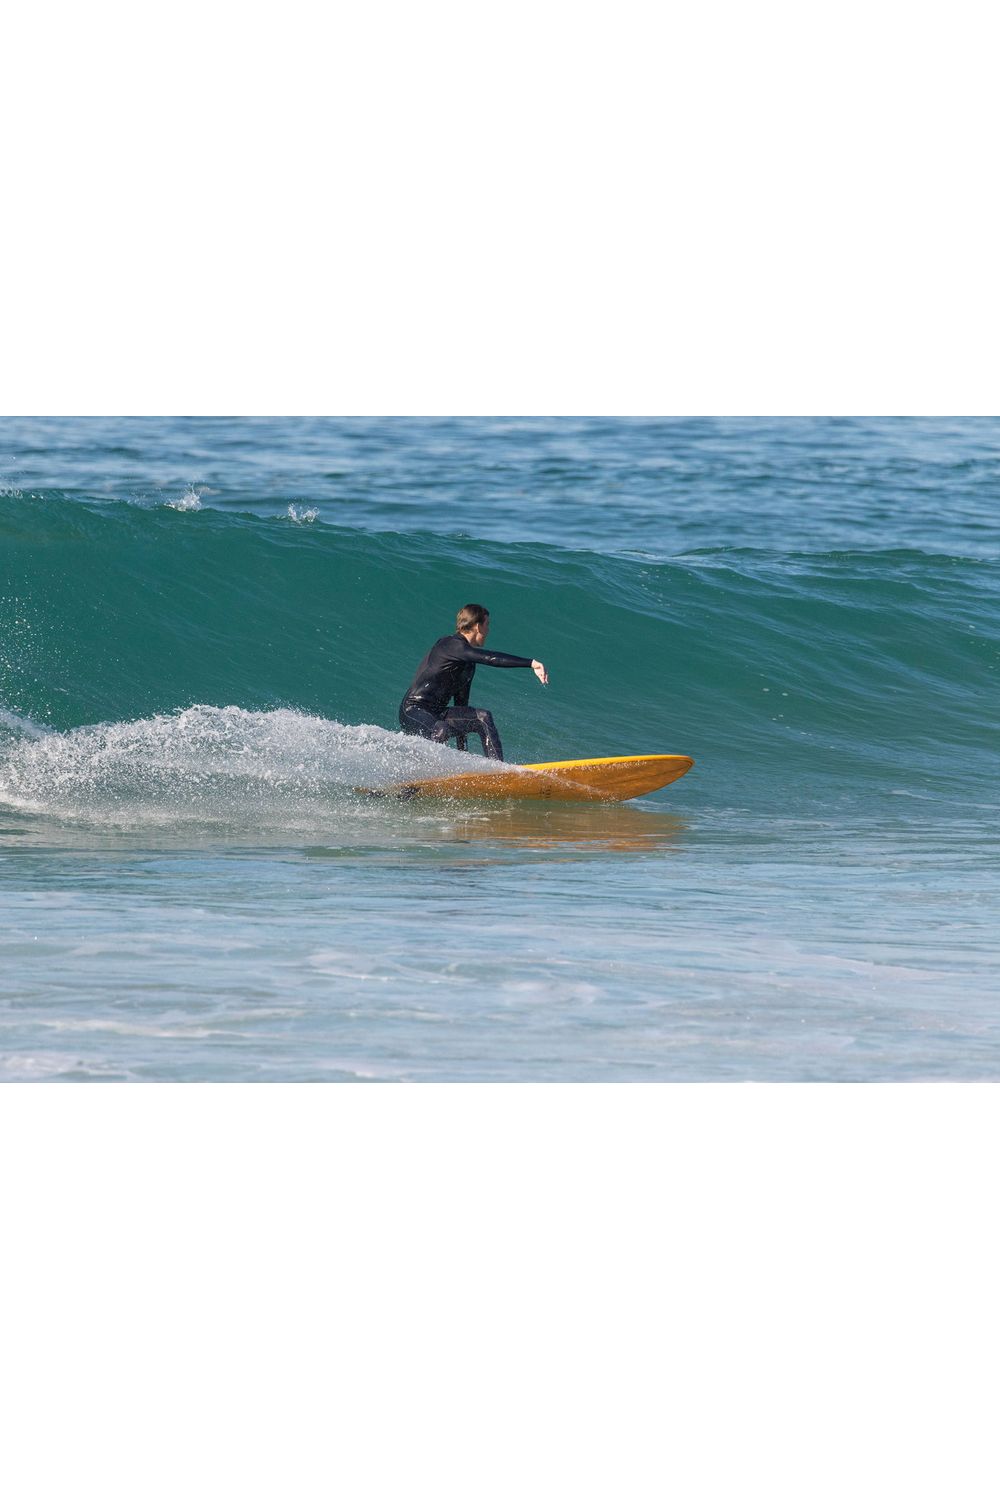 Torq TET Mod Fun Surfboard in Pinline White